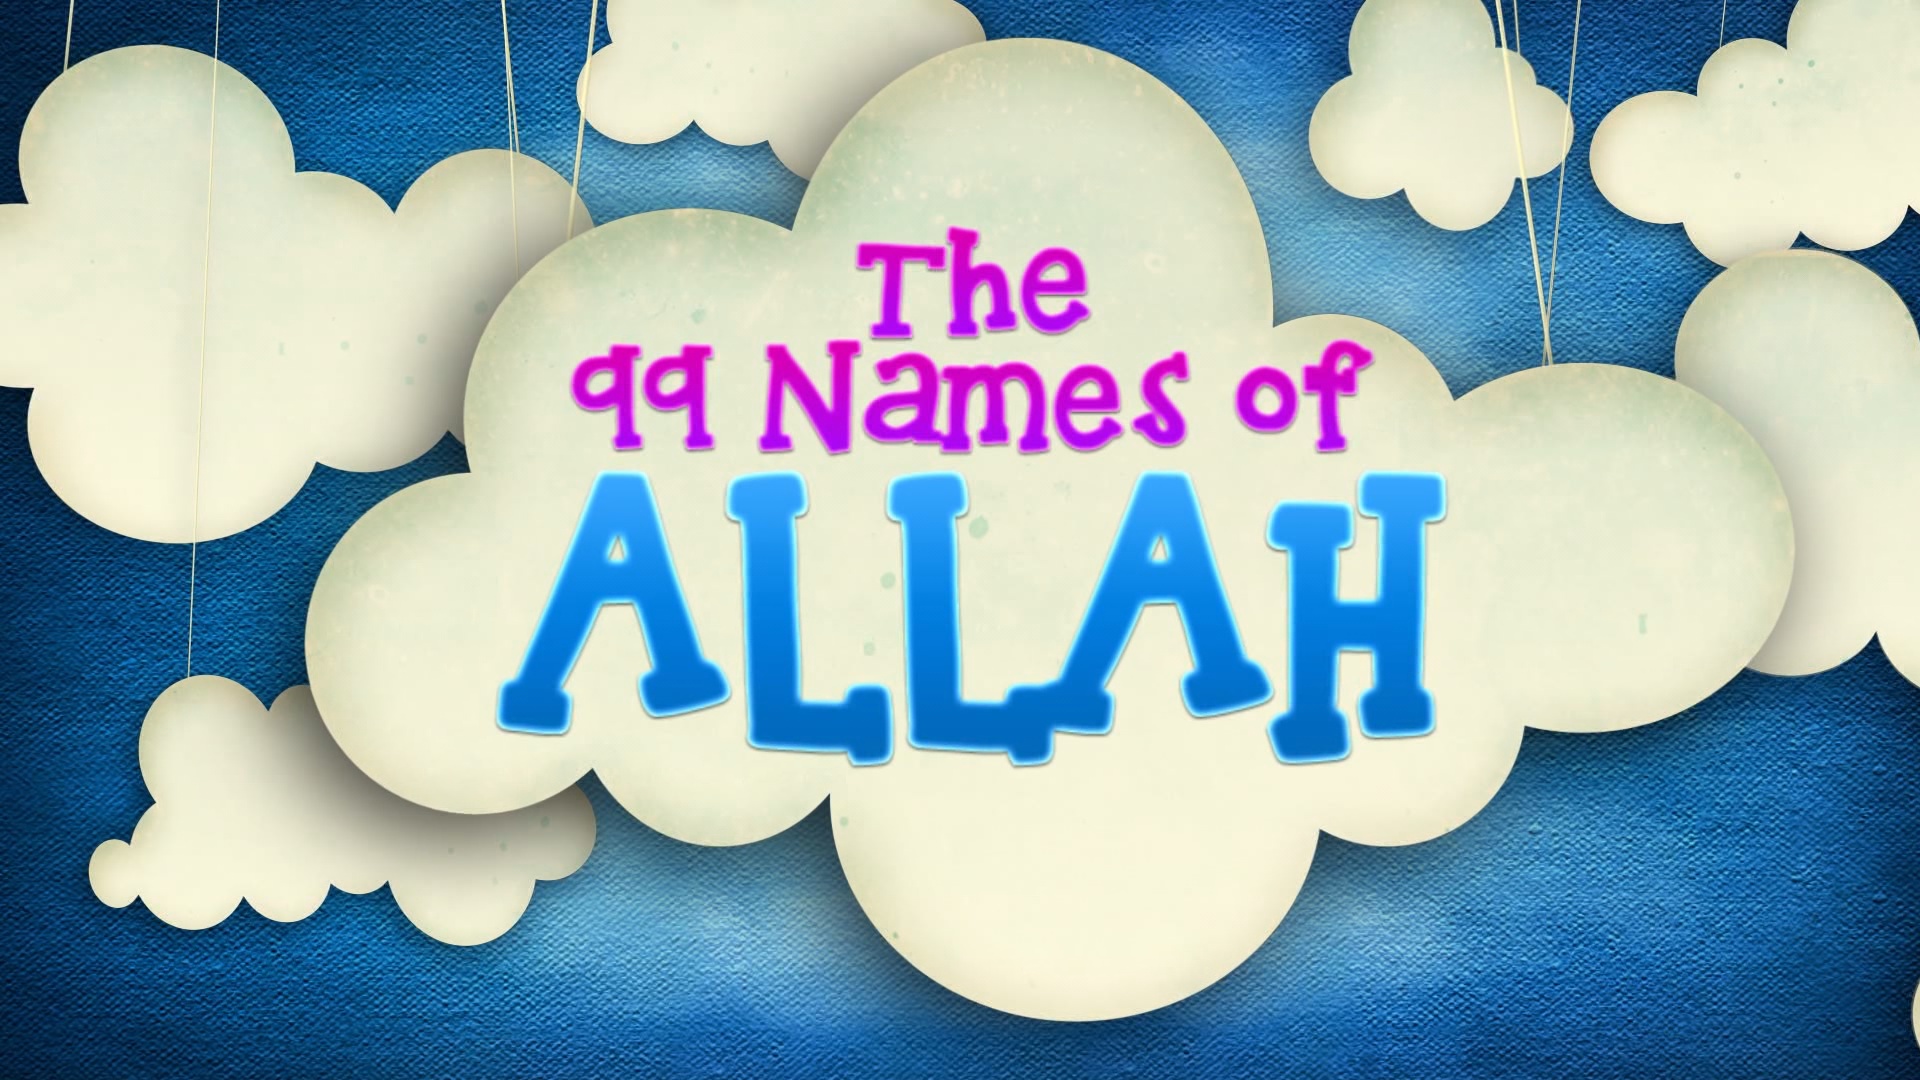 99 name of allah in darry